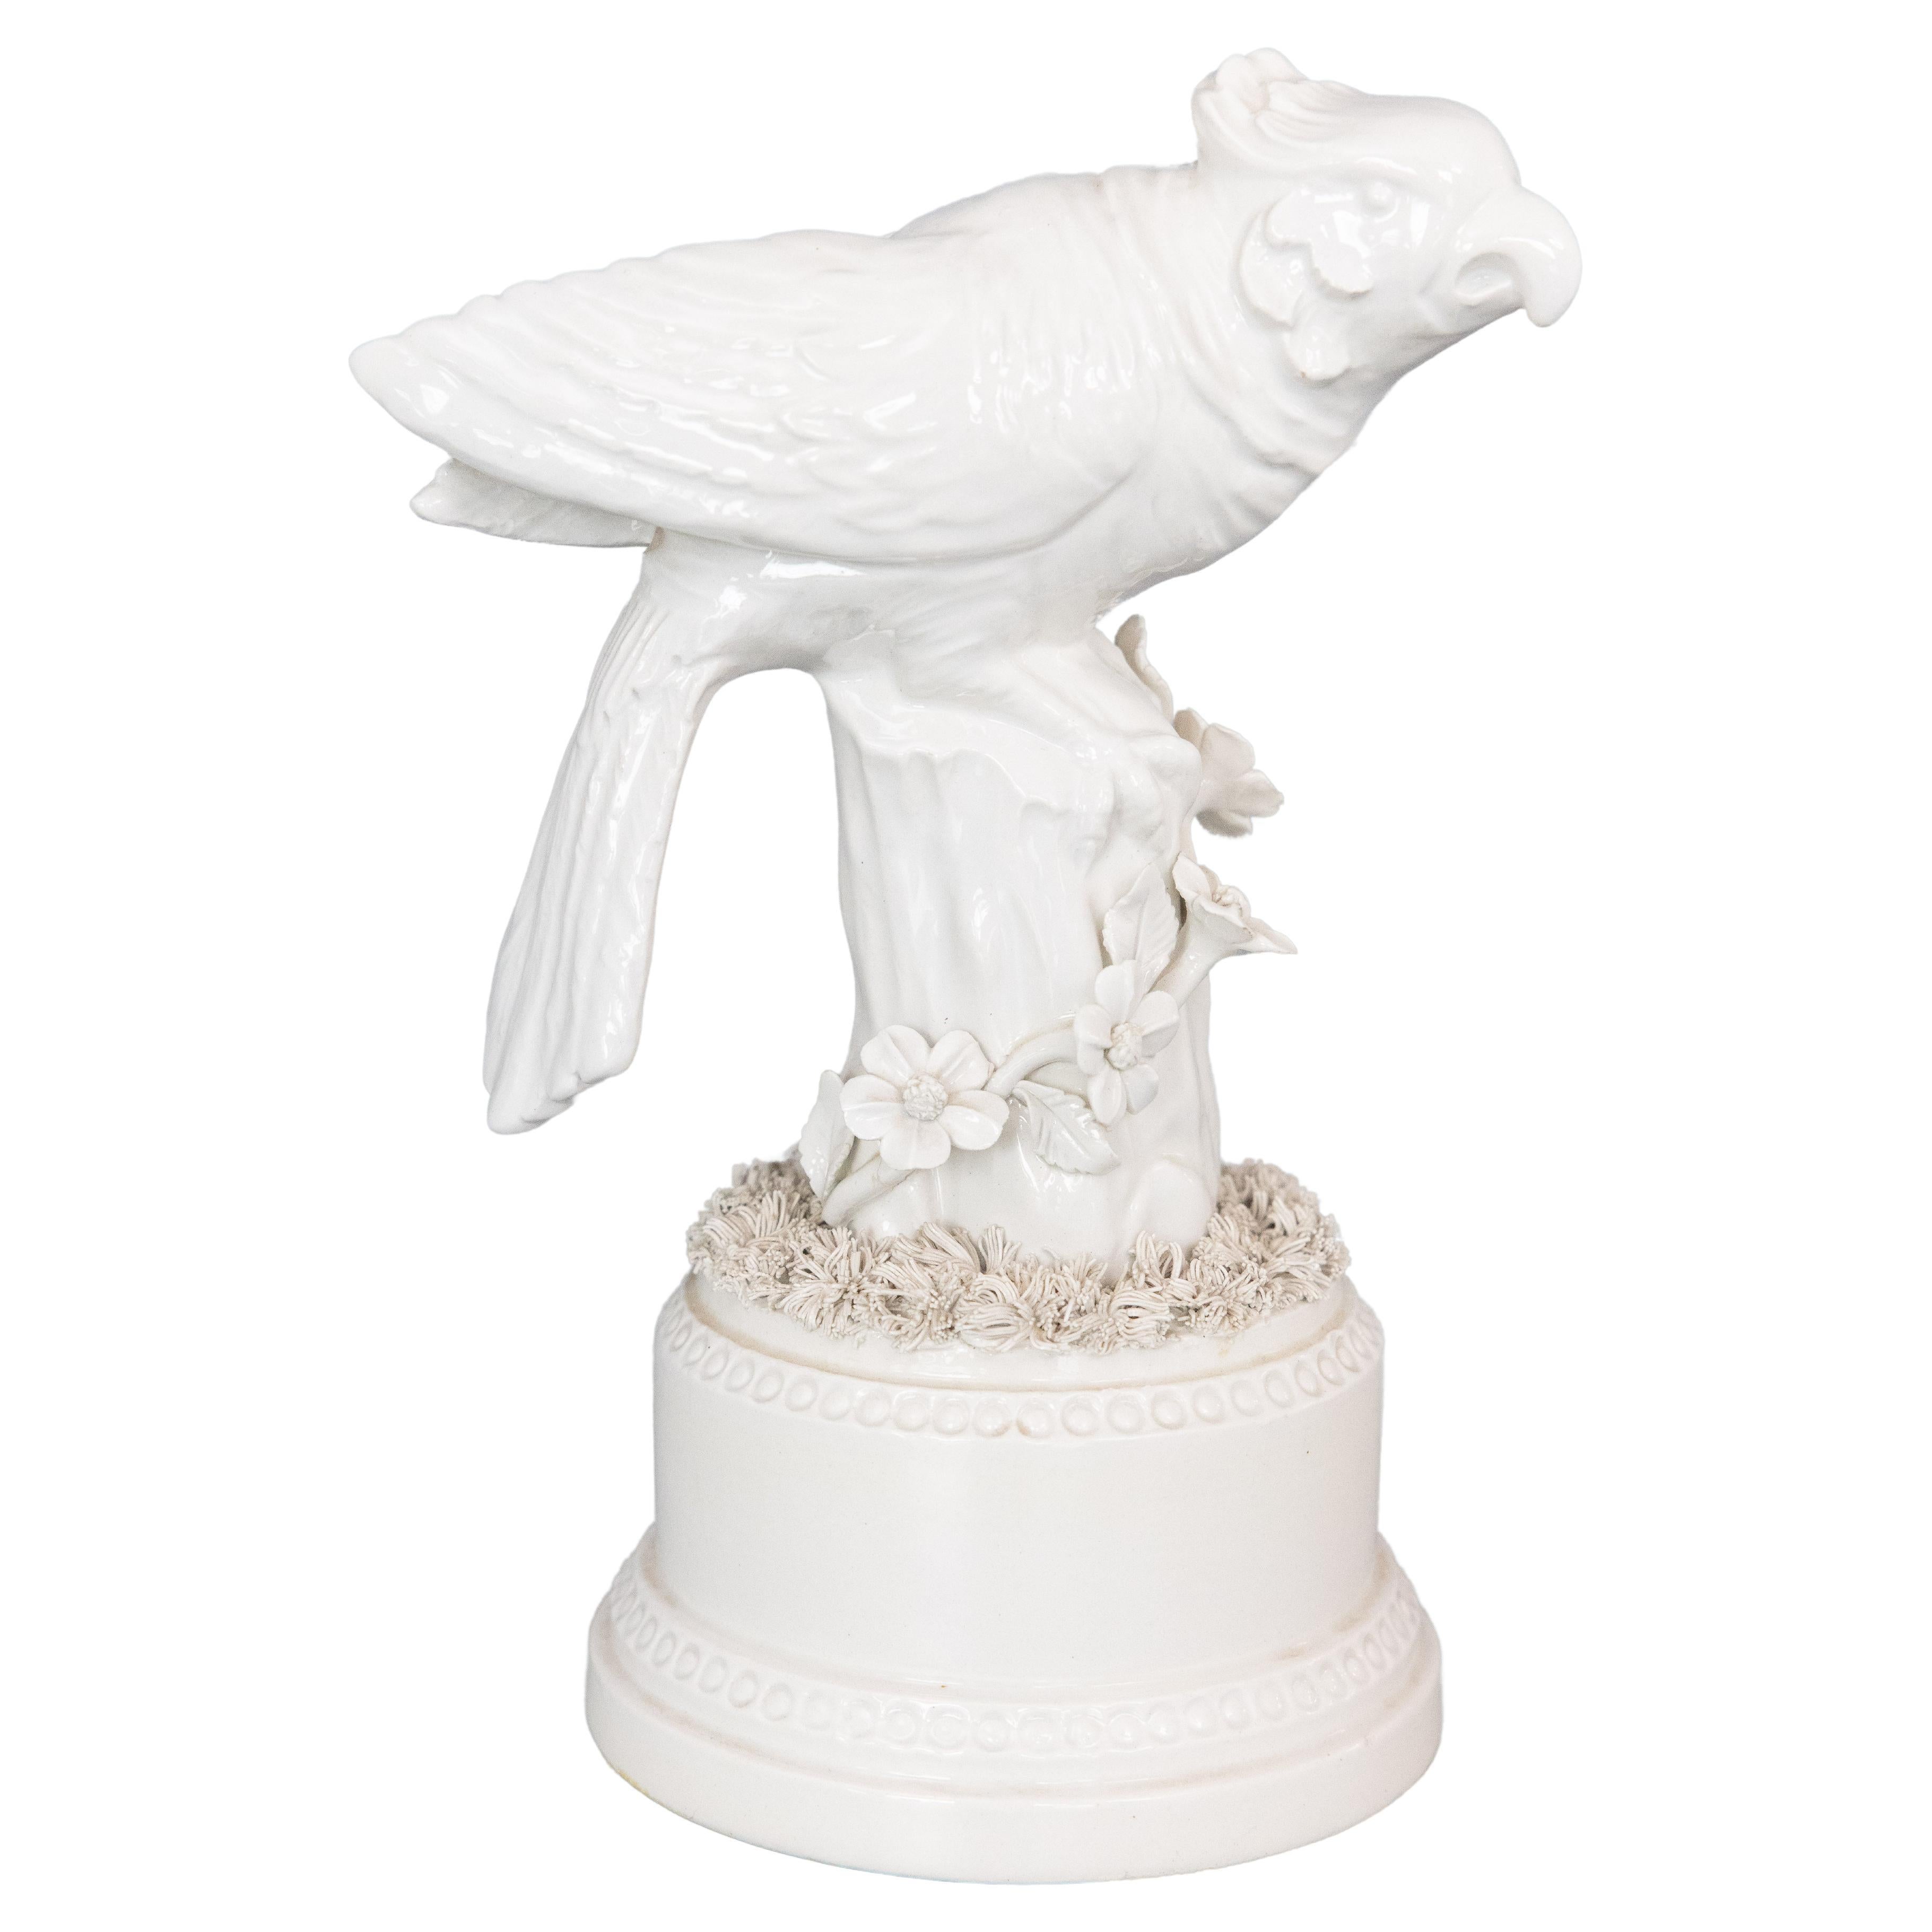 Figurine de sculpture italienne en porcelaine blanche Blanc De Chine perroquet Cockatiel Bird